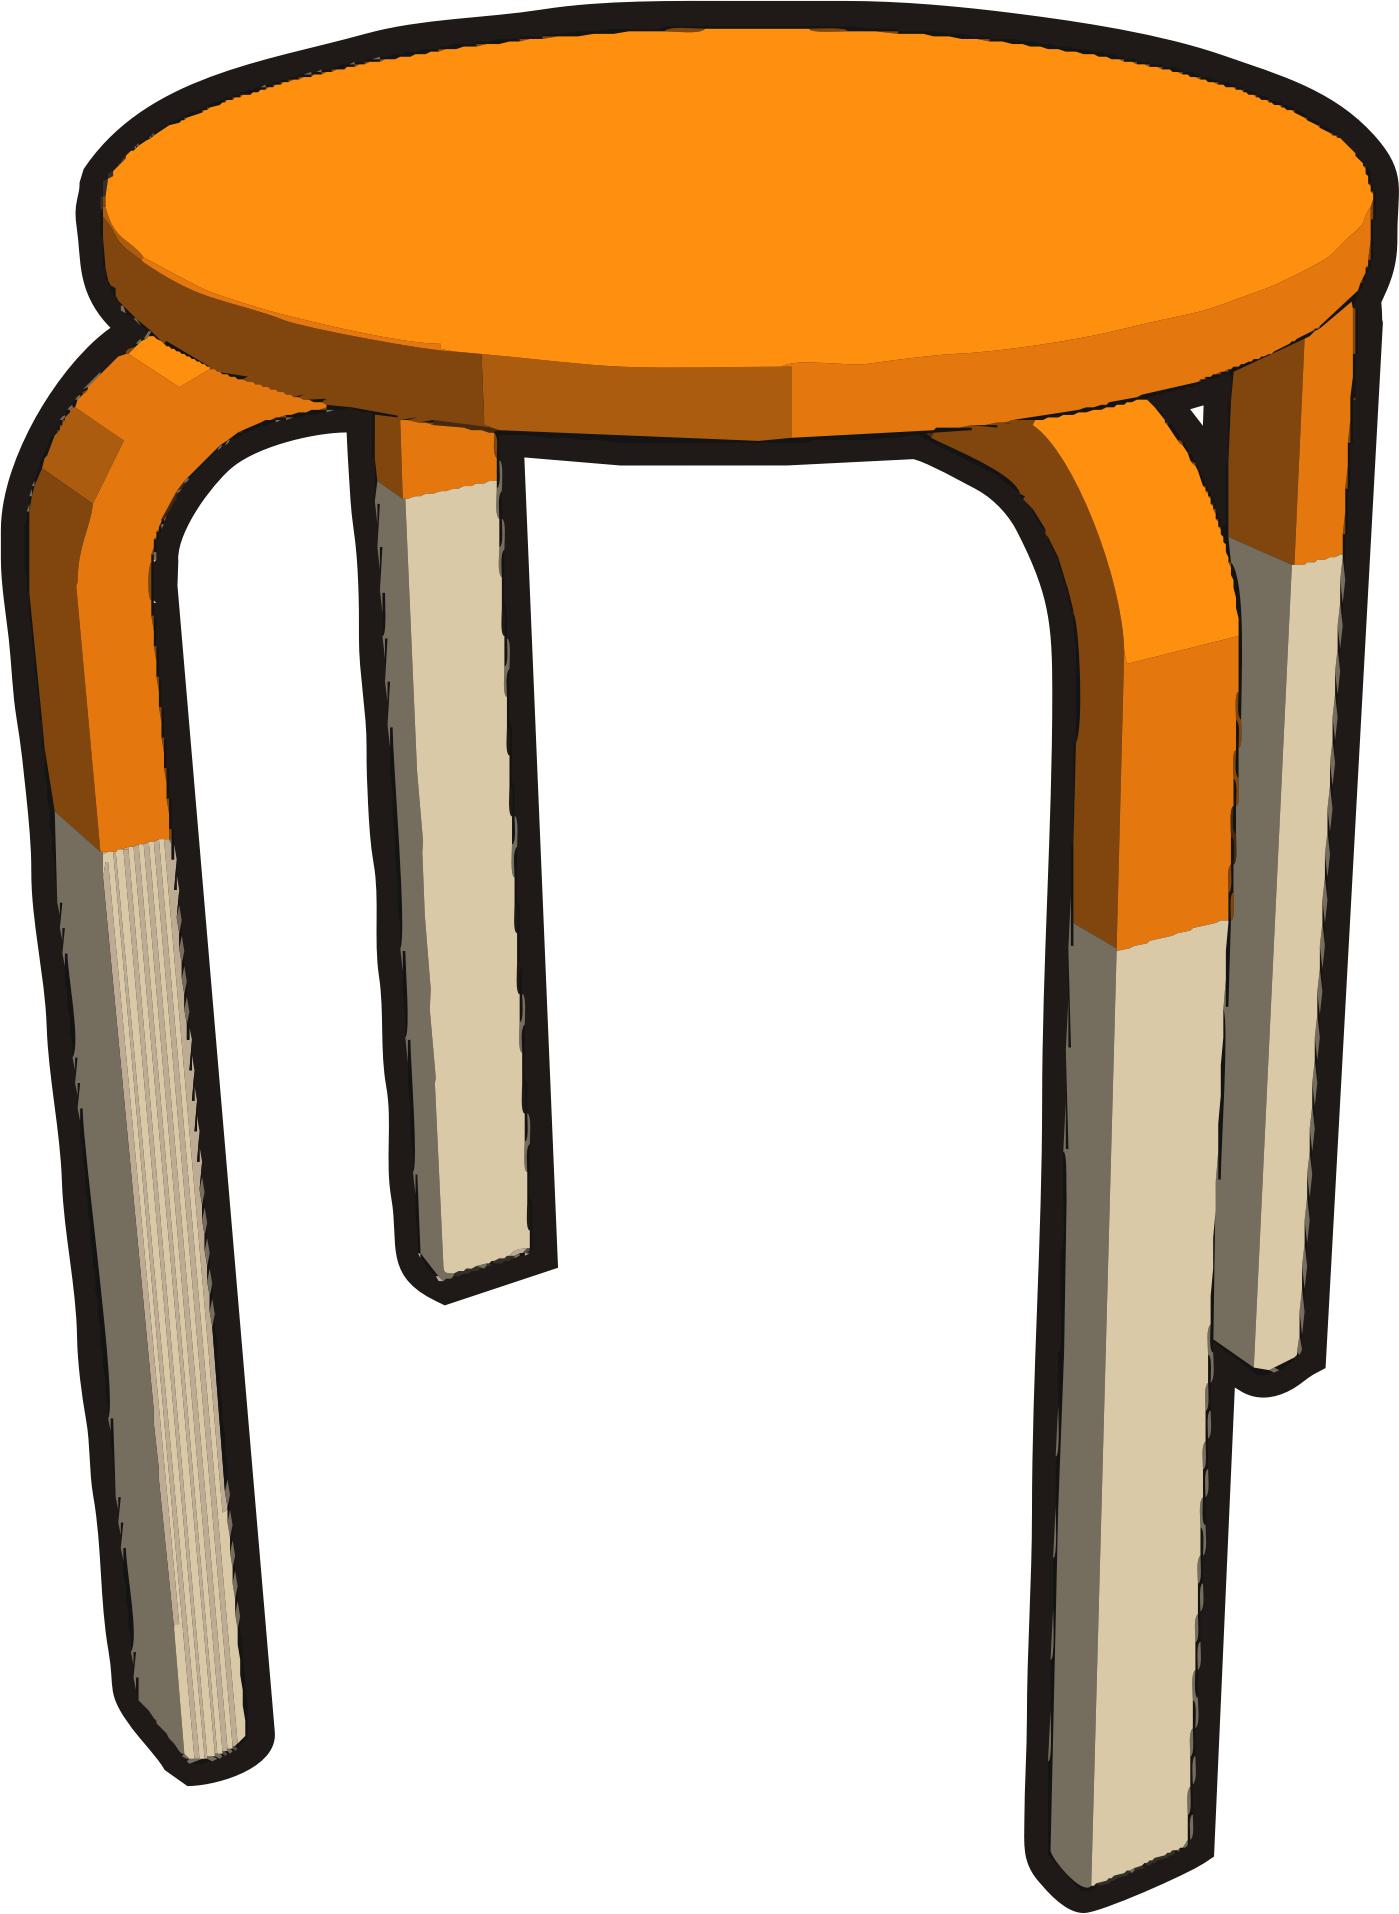 Ikea stuff - Frosta stool, half orange png